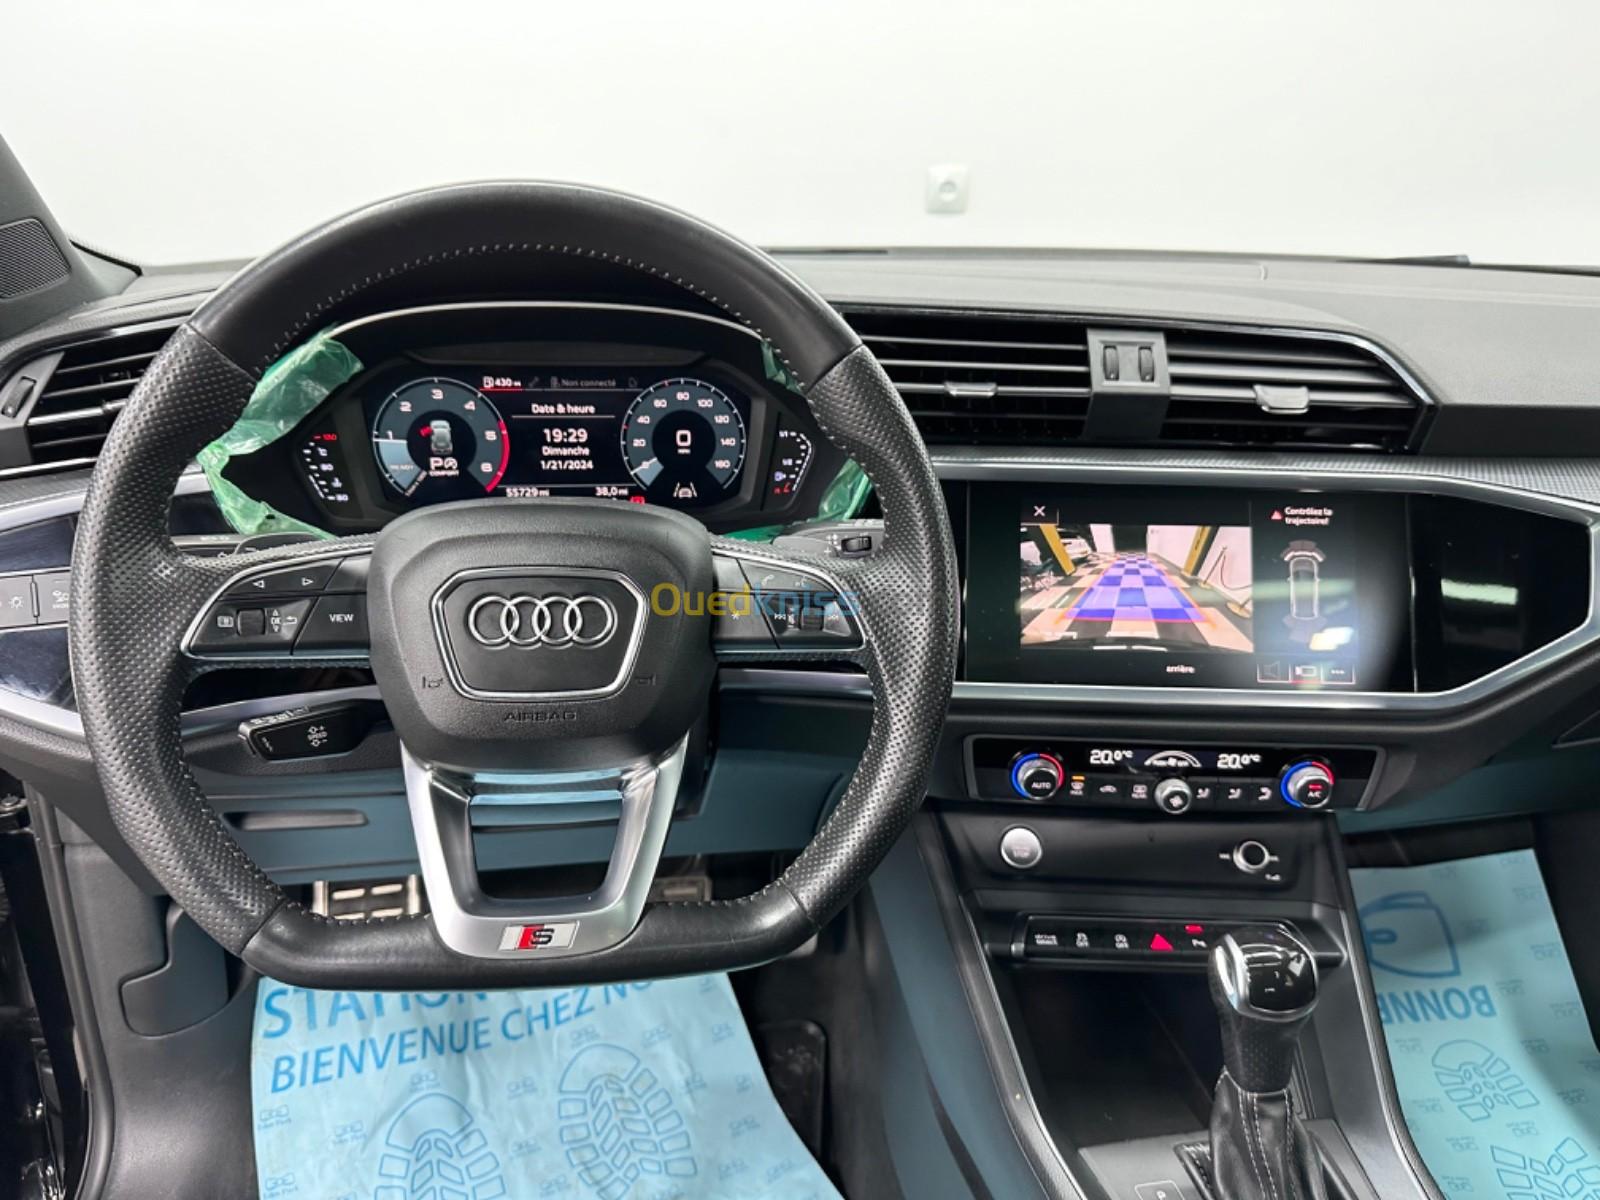 Audi Q3 2019 S Line